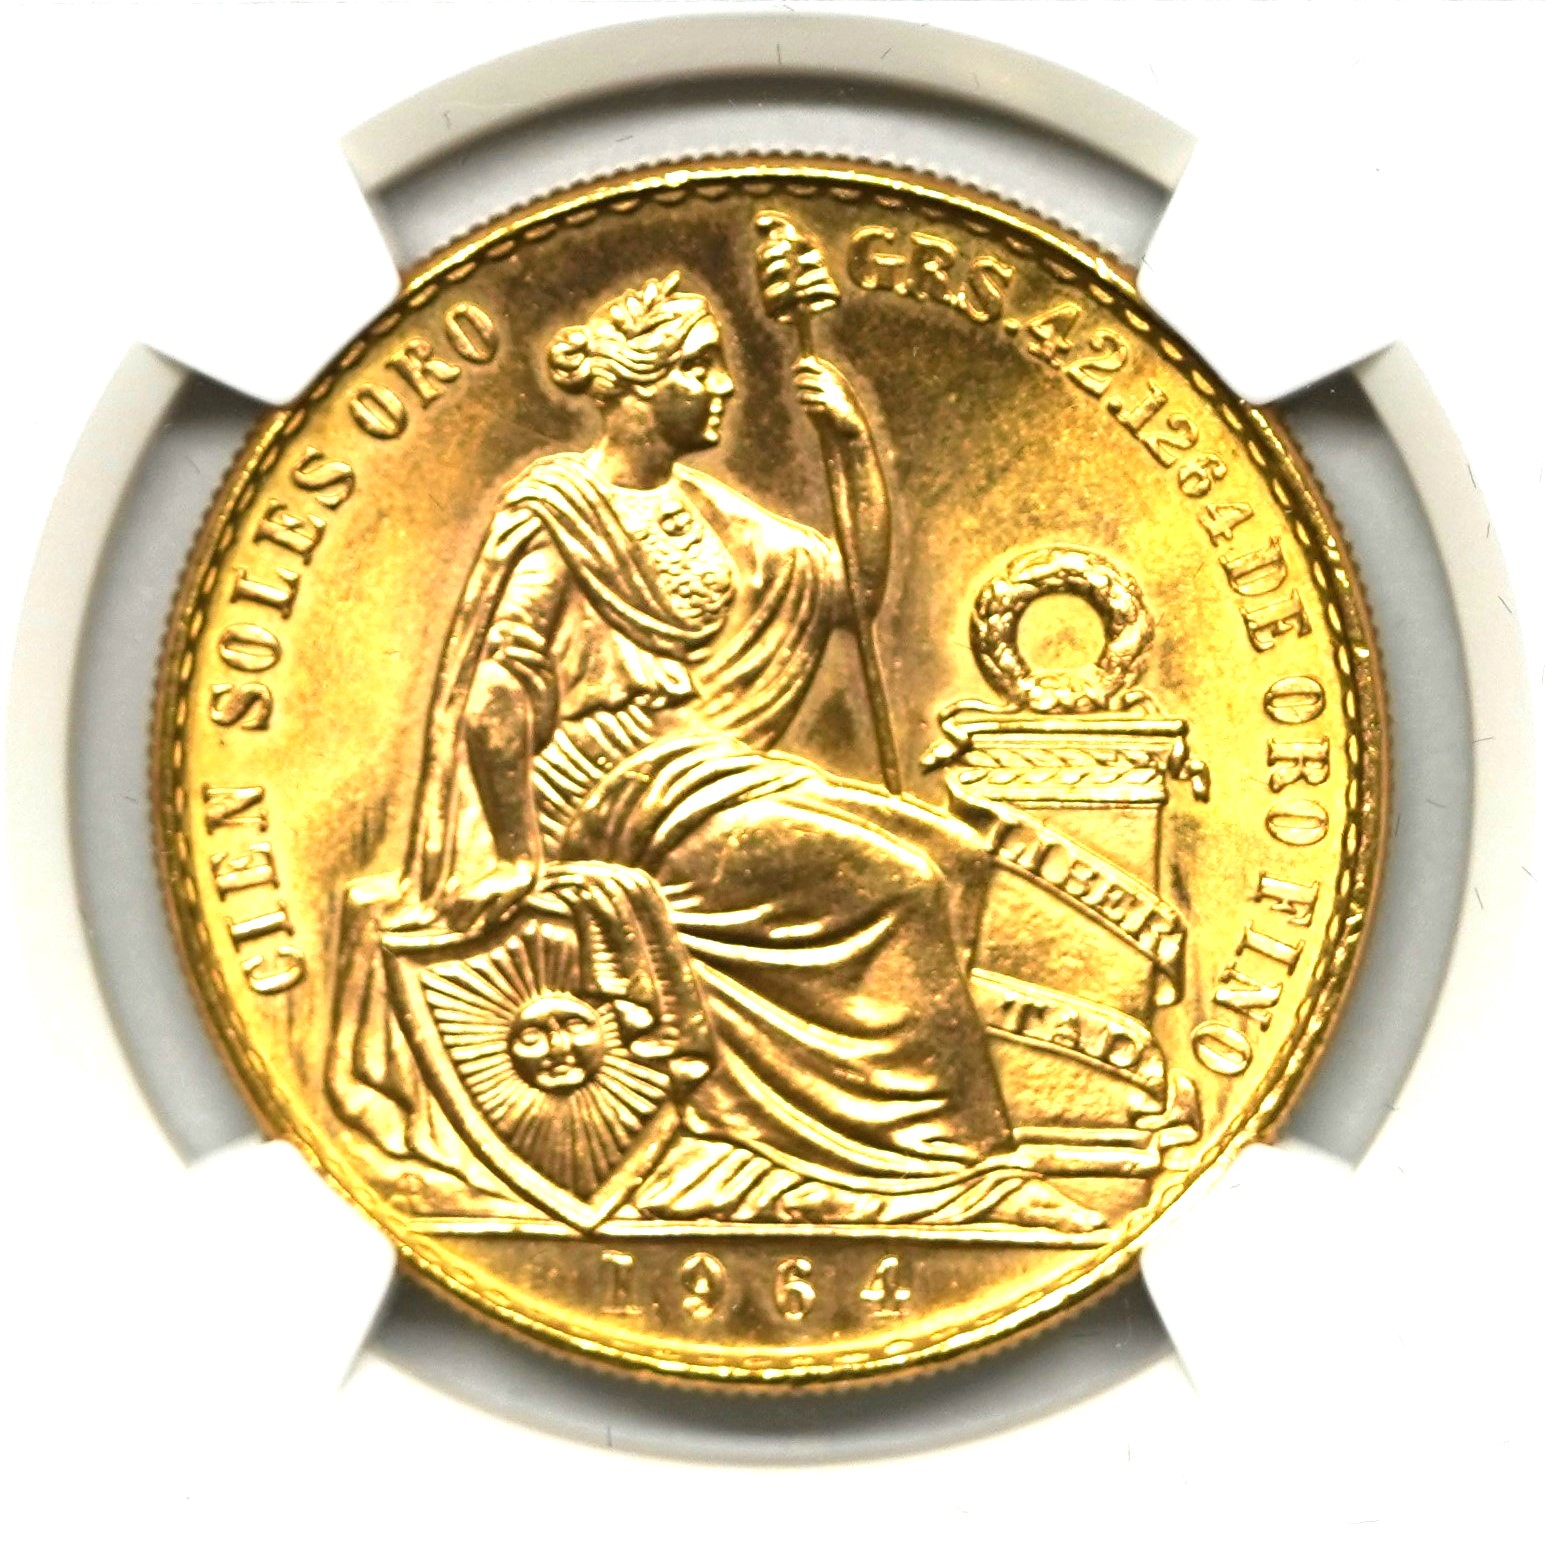 Sold】ペルー 1964年 100ソル金貨 MS66 NGC | ソブリンパートナーズ